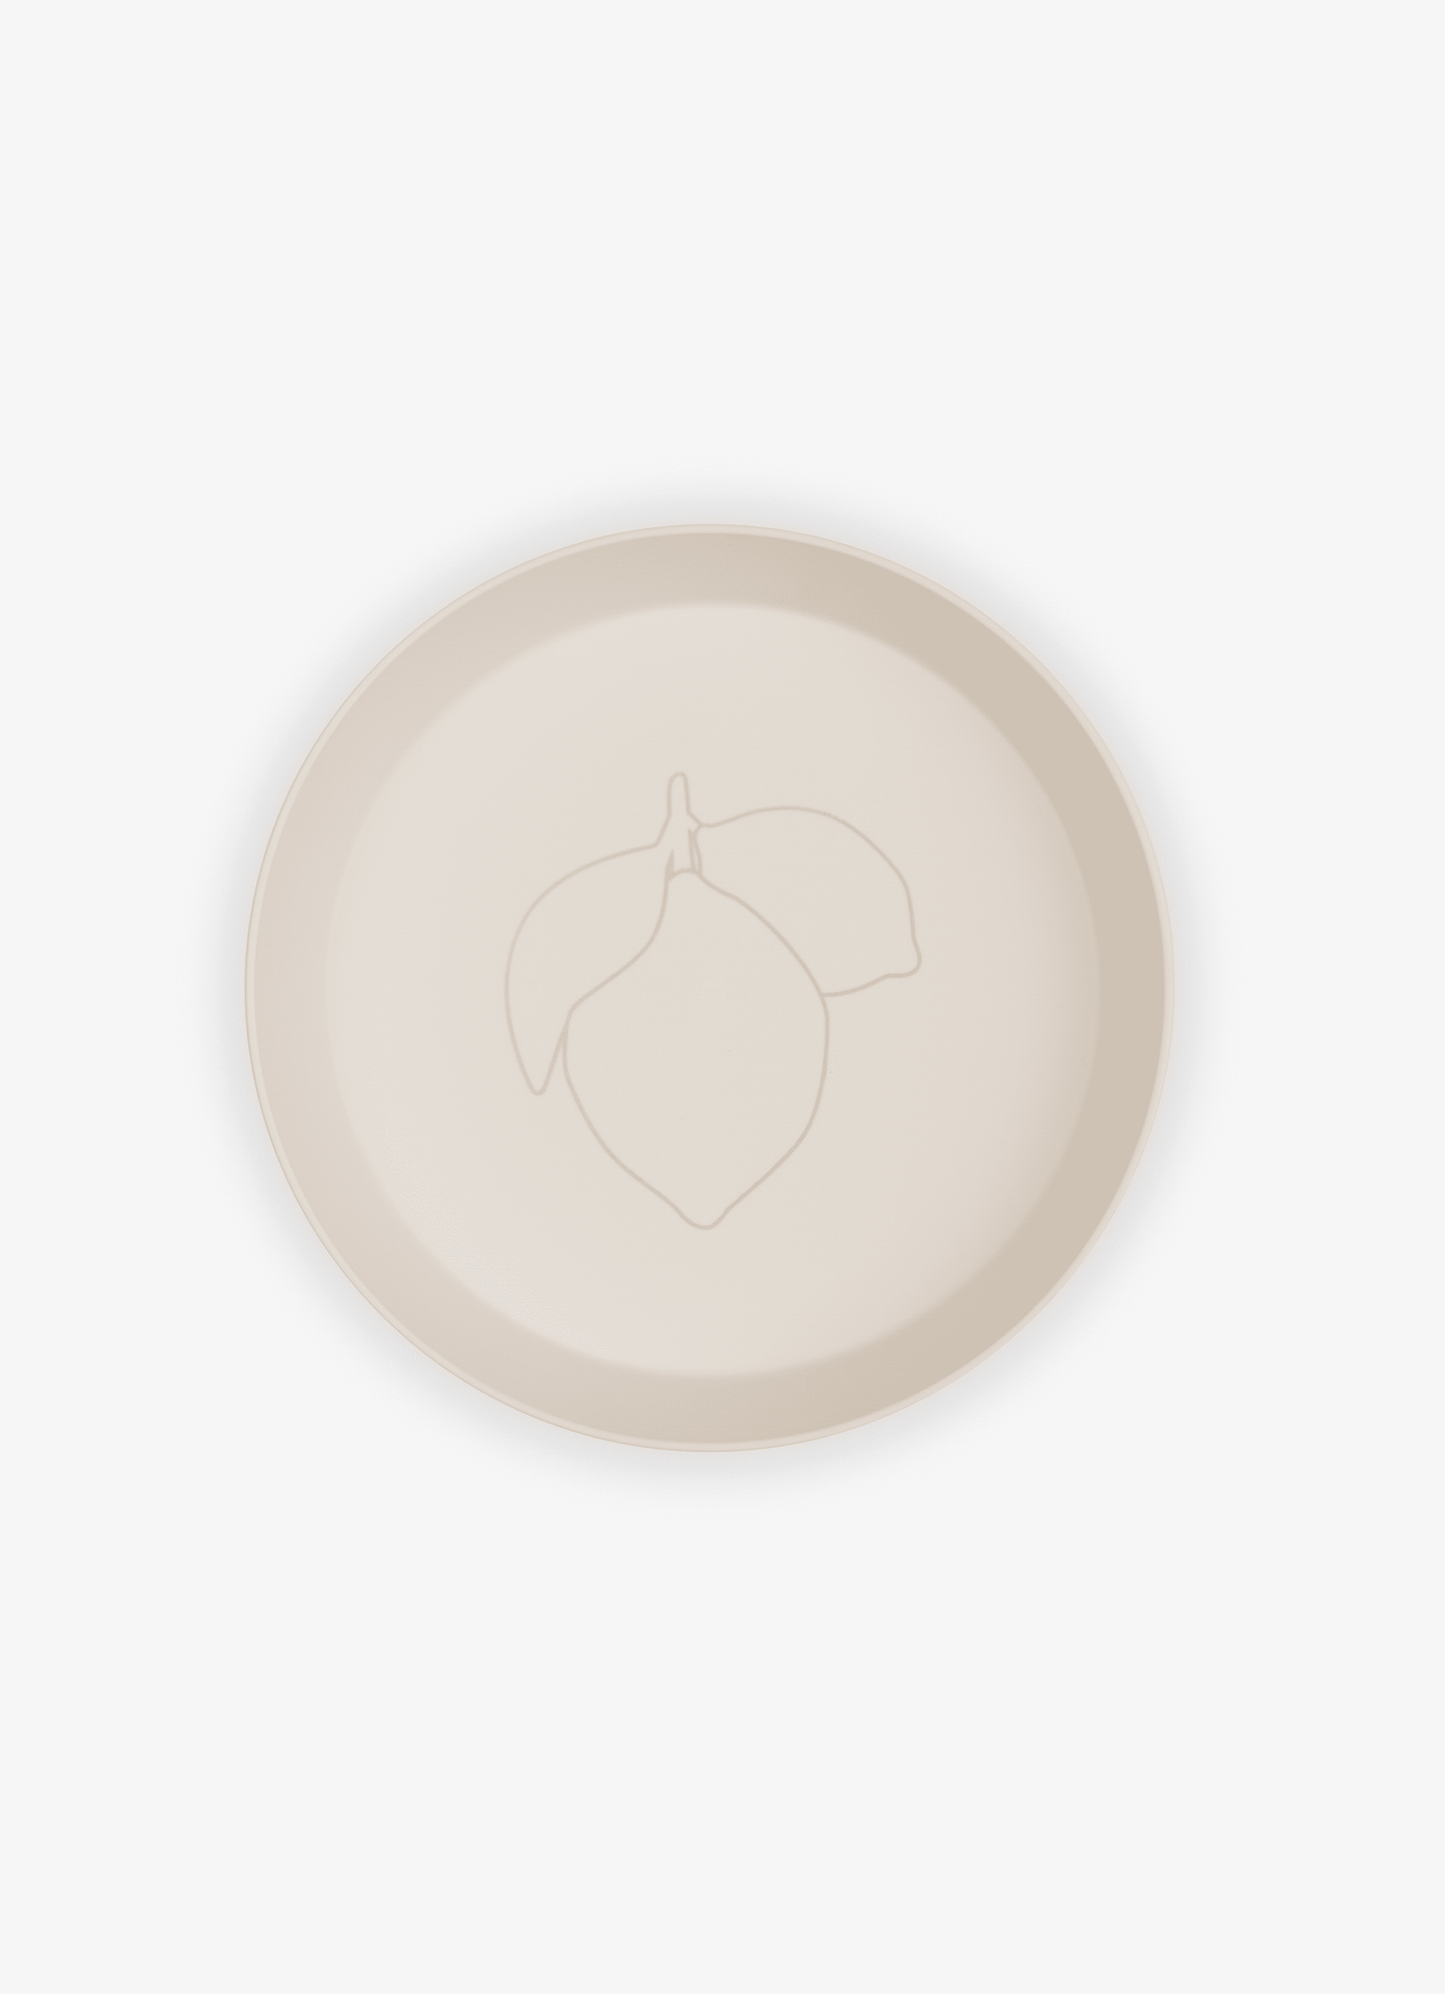 Bio-Based Tableware set - Lemon